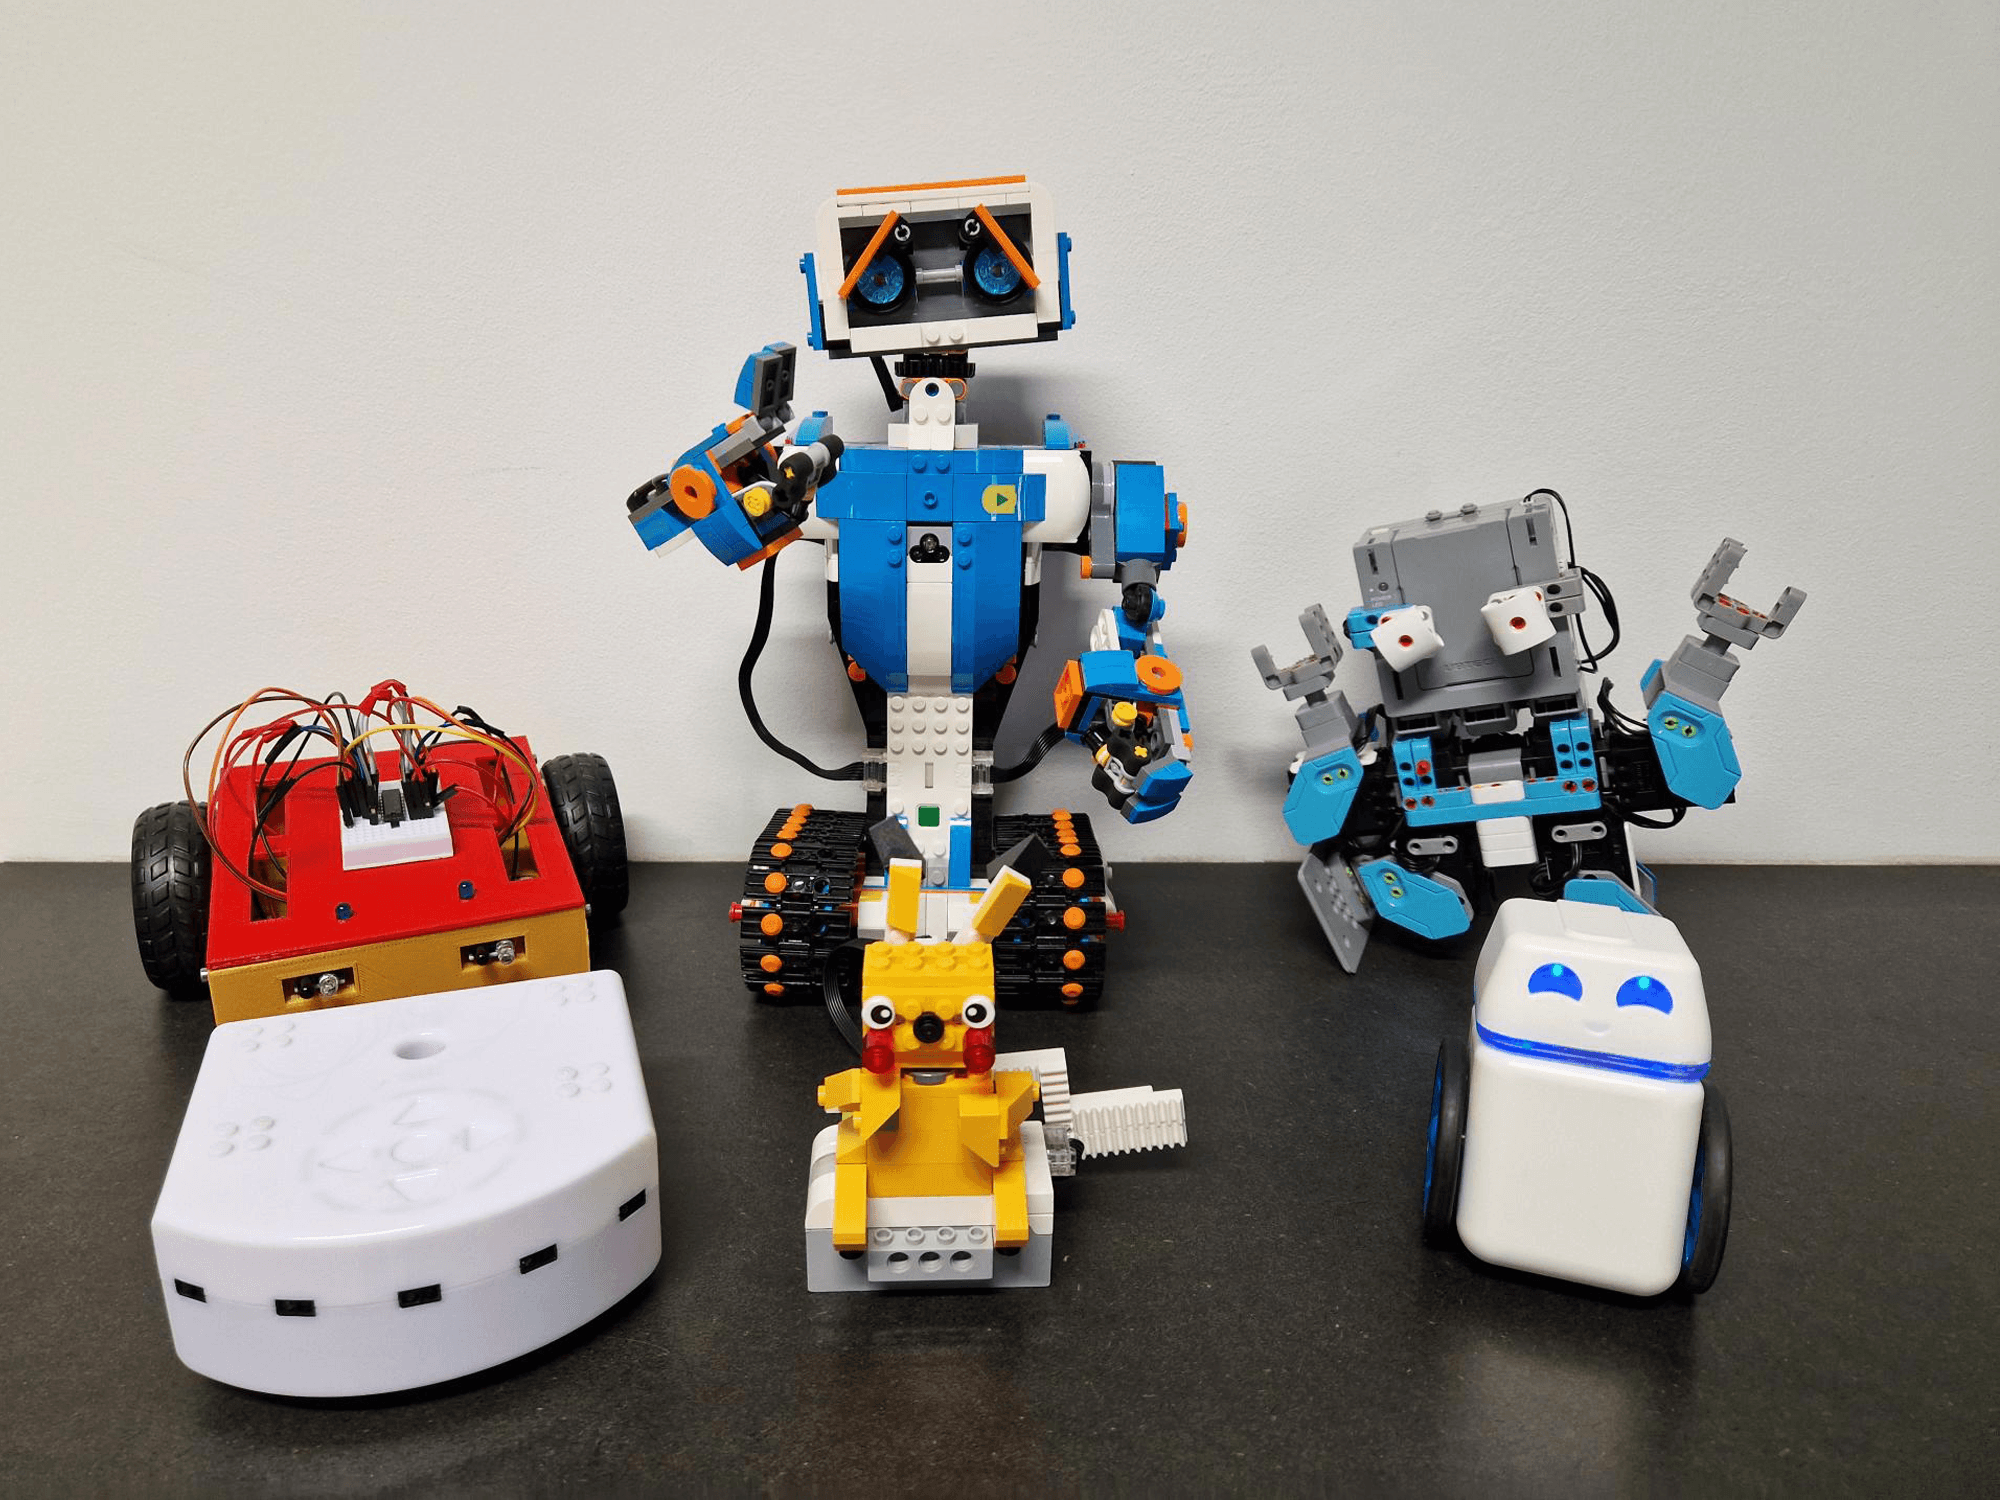 EuraTech'Kids: robotics and coding workshops for children